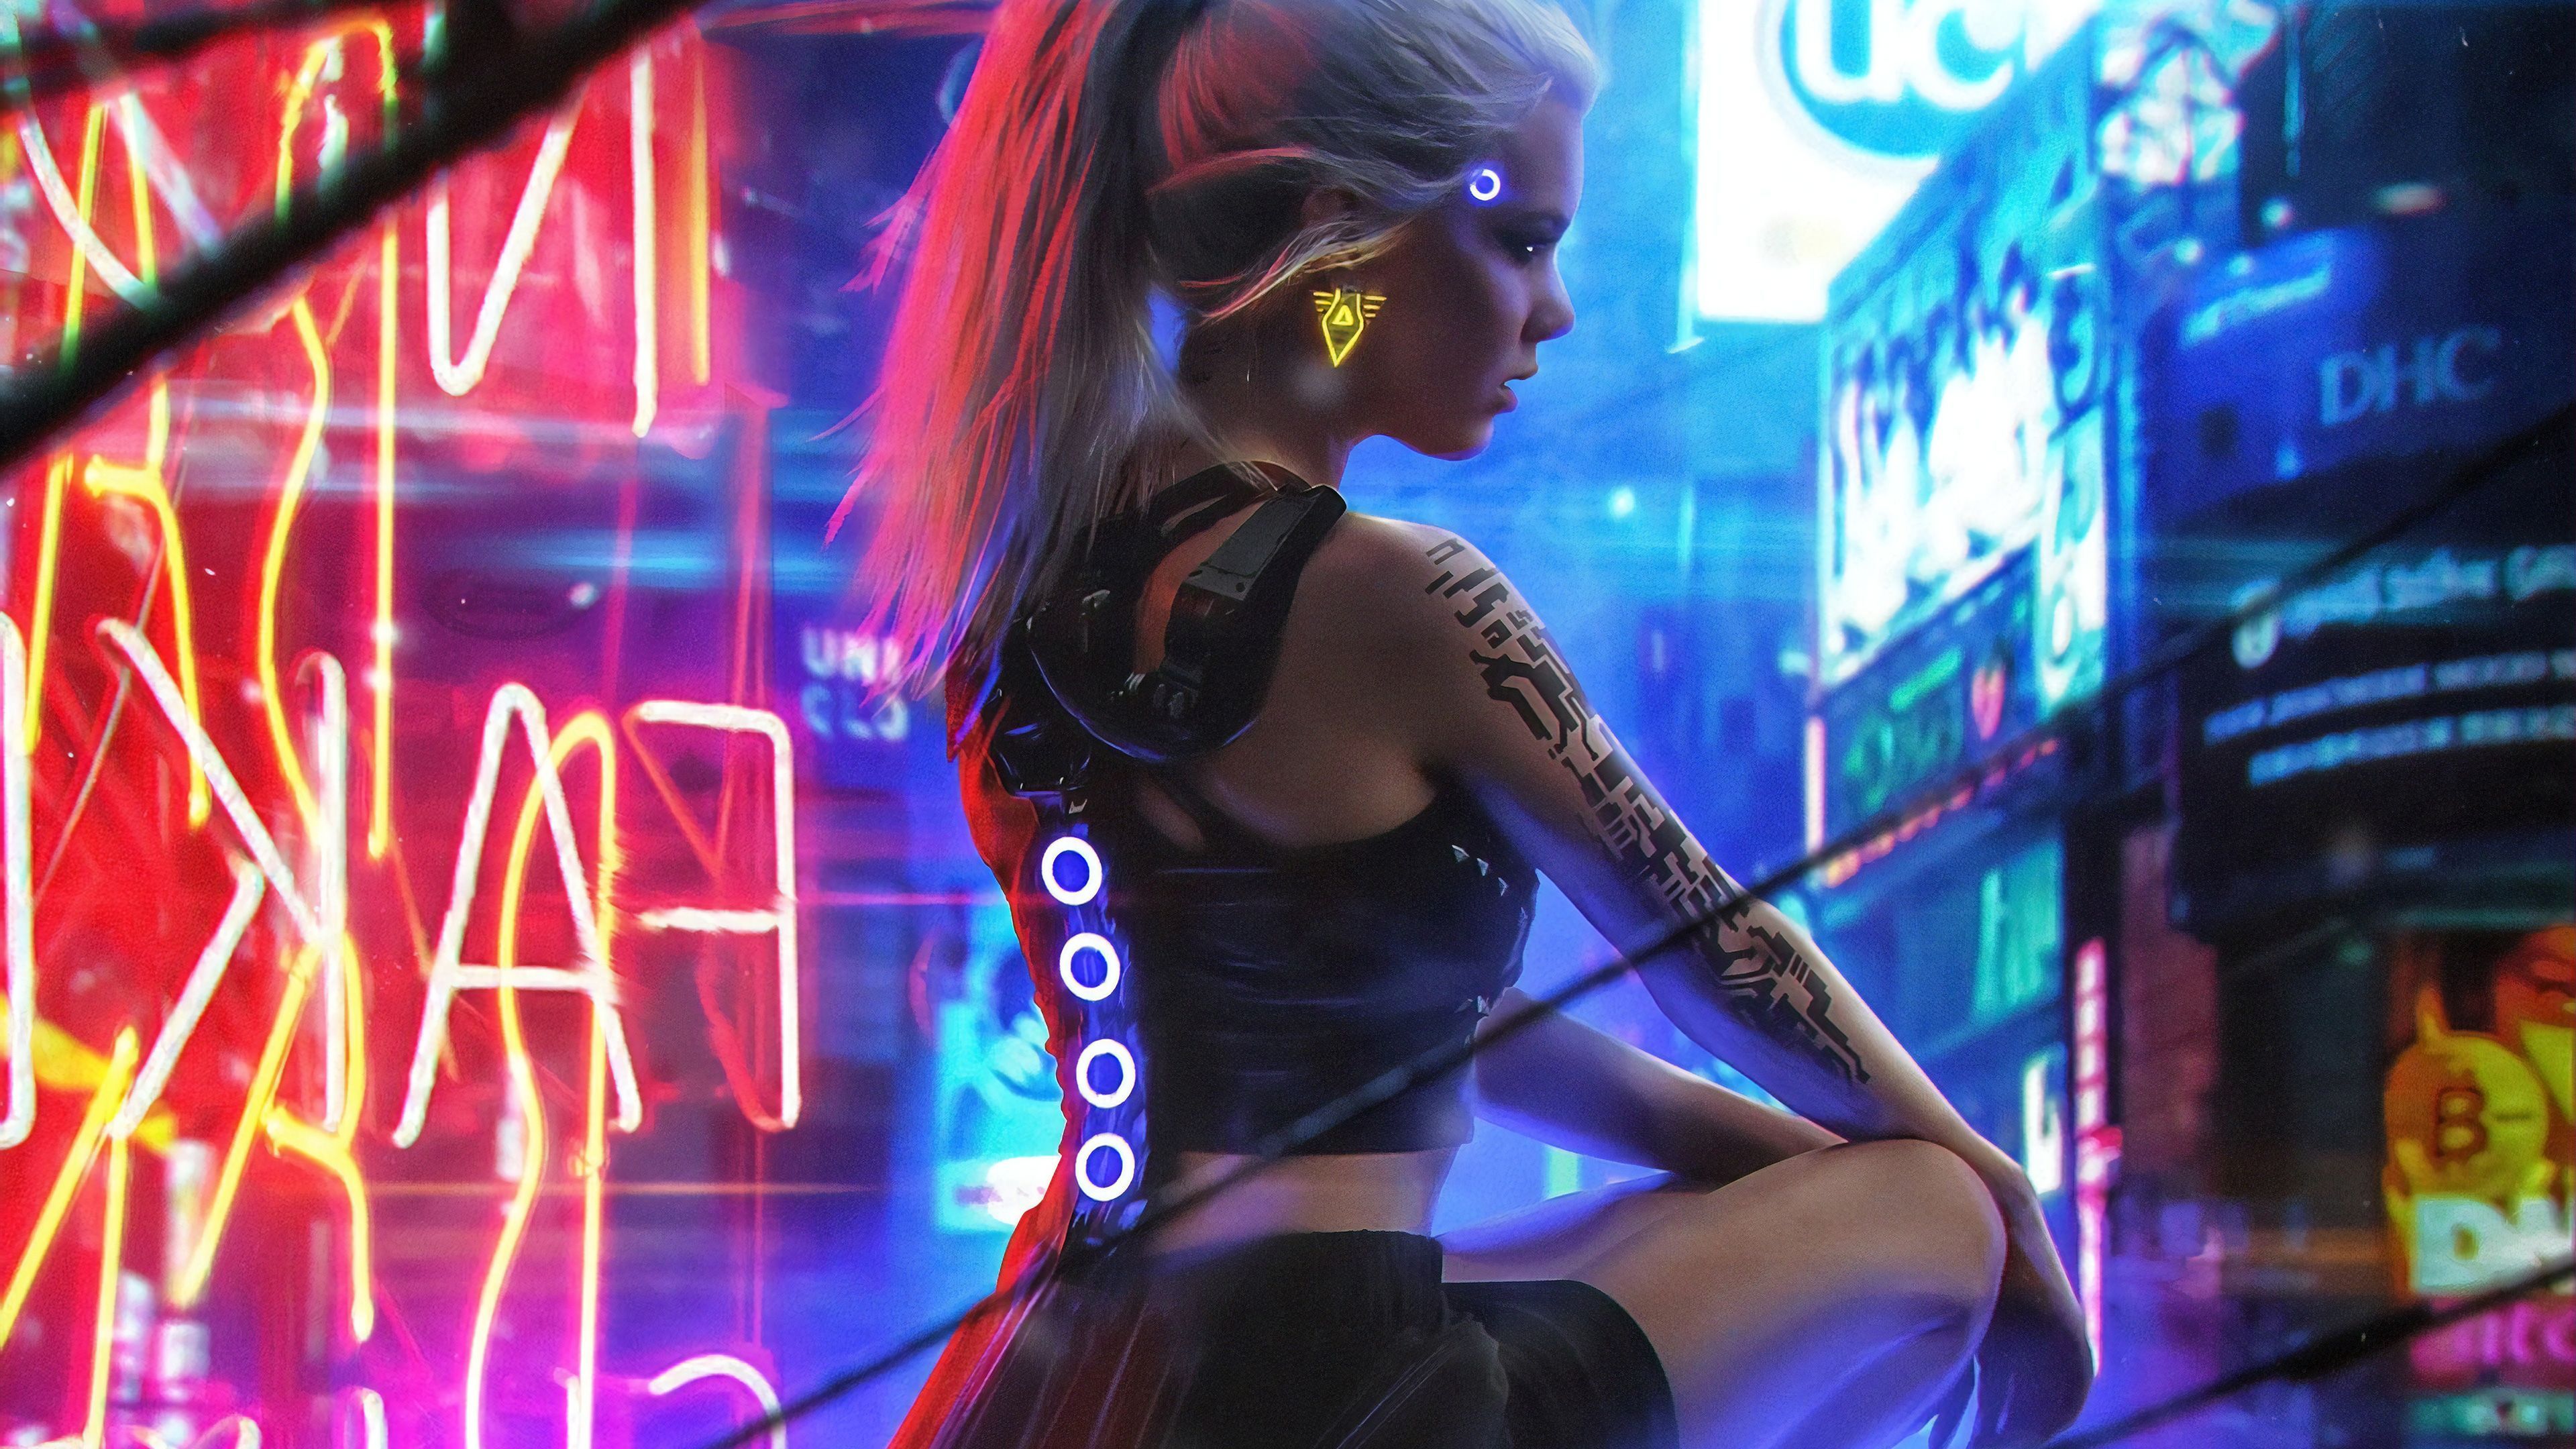 Cyberpunk Neon Girl Neon Wallpaper, Hd Wallpaper, Games Wallpaper, Digital Art Wallpaper, Cyberpunk 2077 Wallpaper, Art. Neon Girl, Cyberpunk Cyberpunk